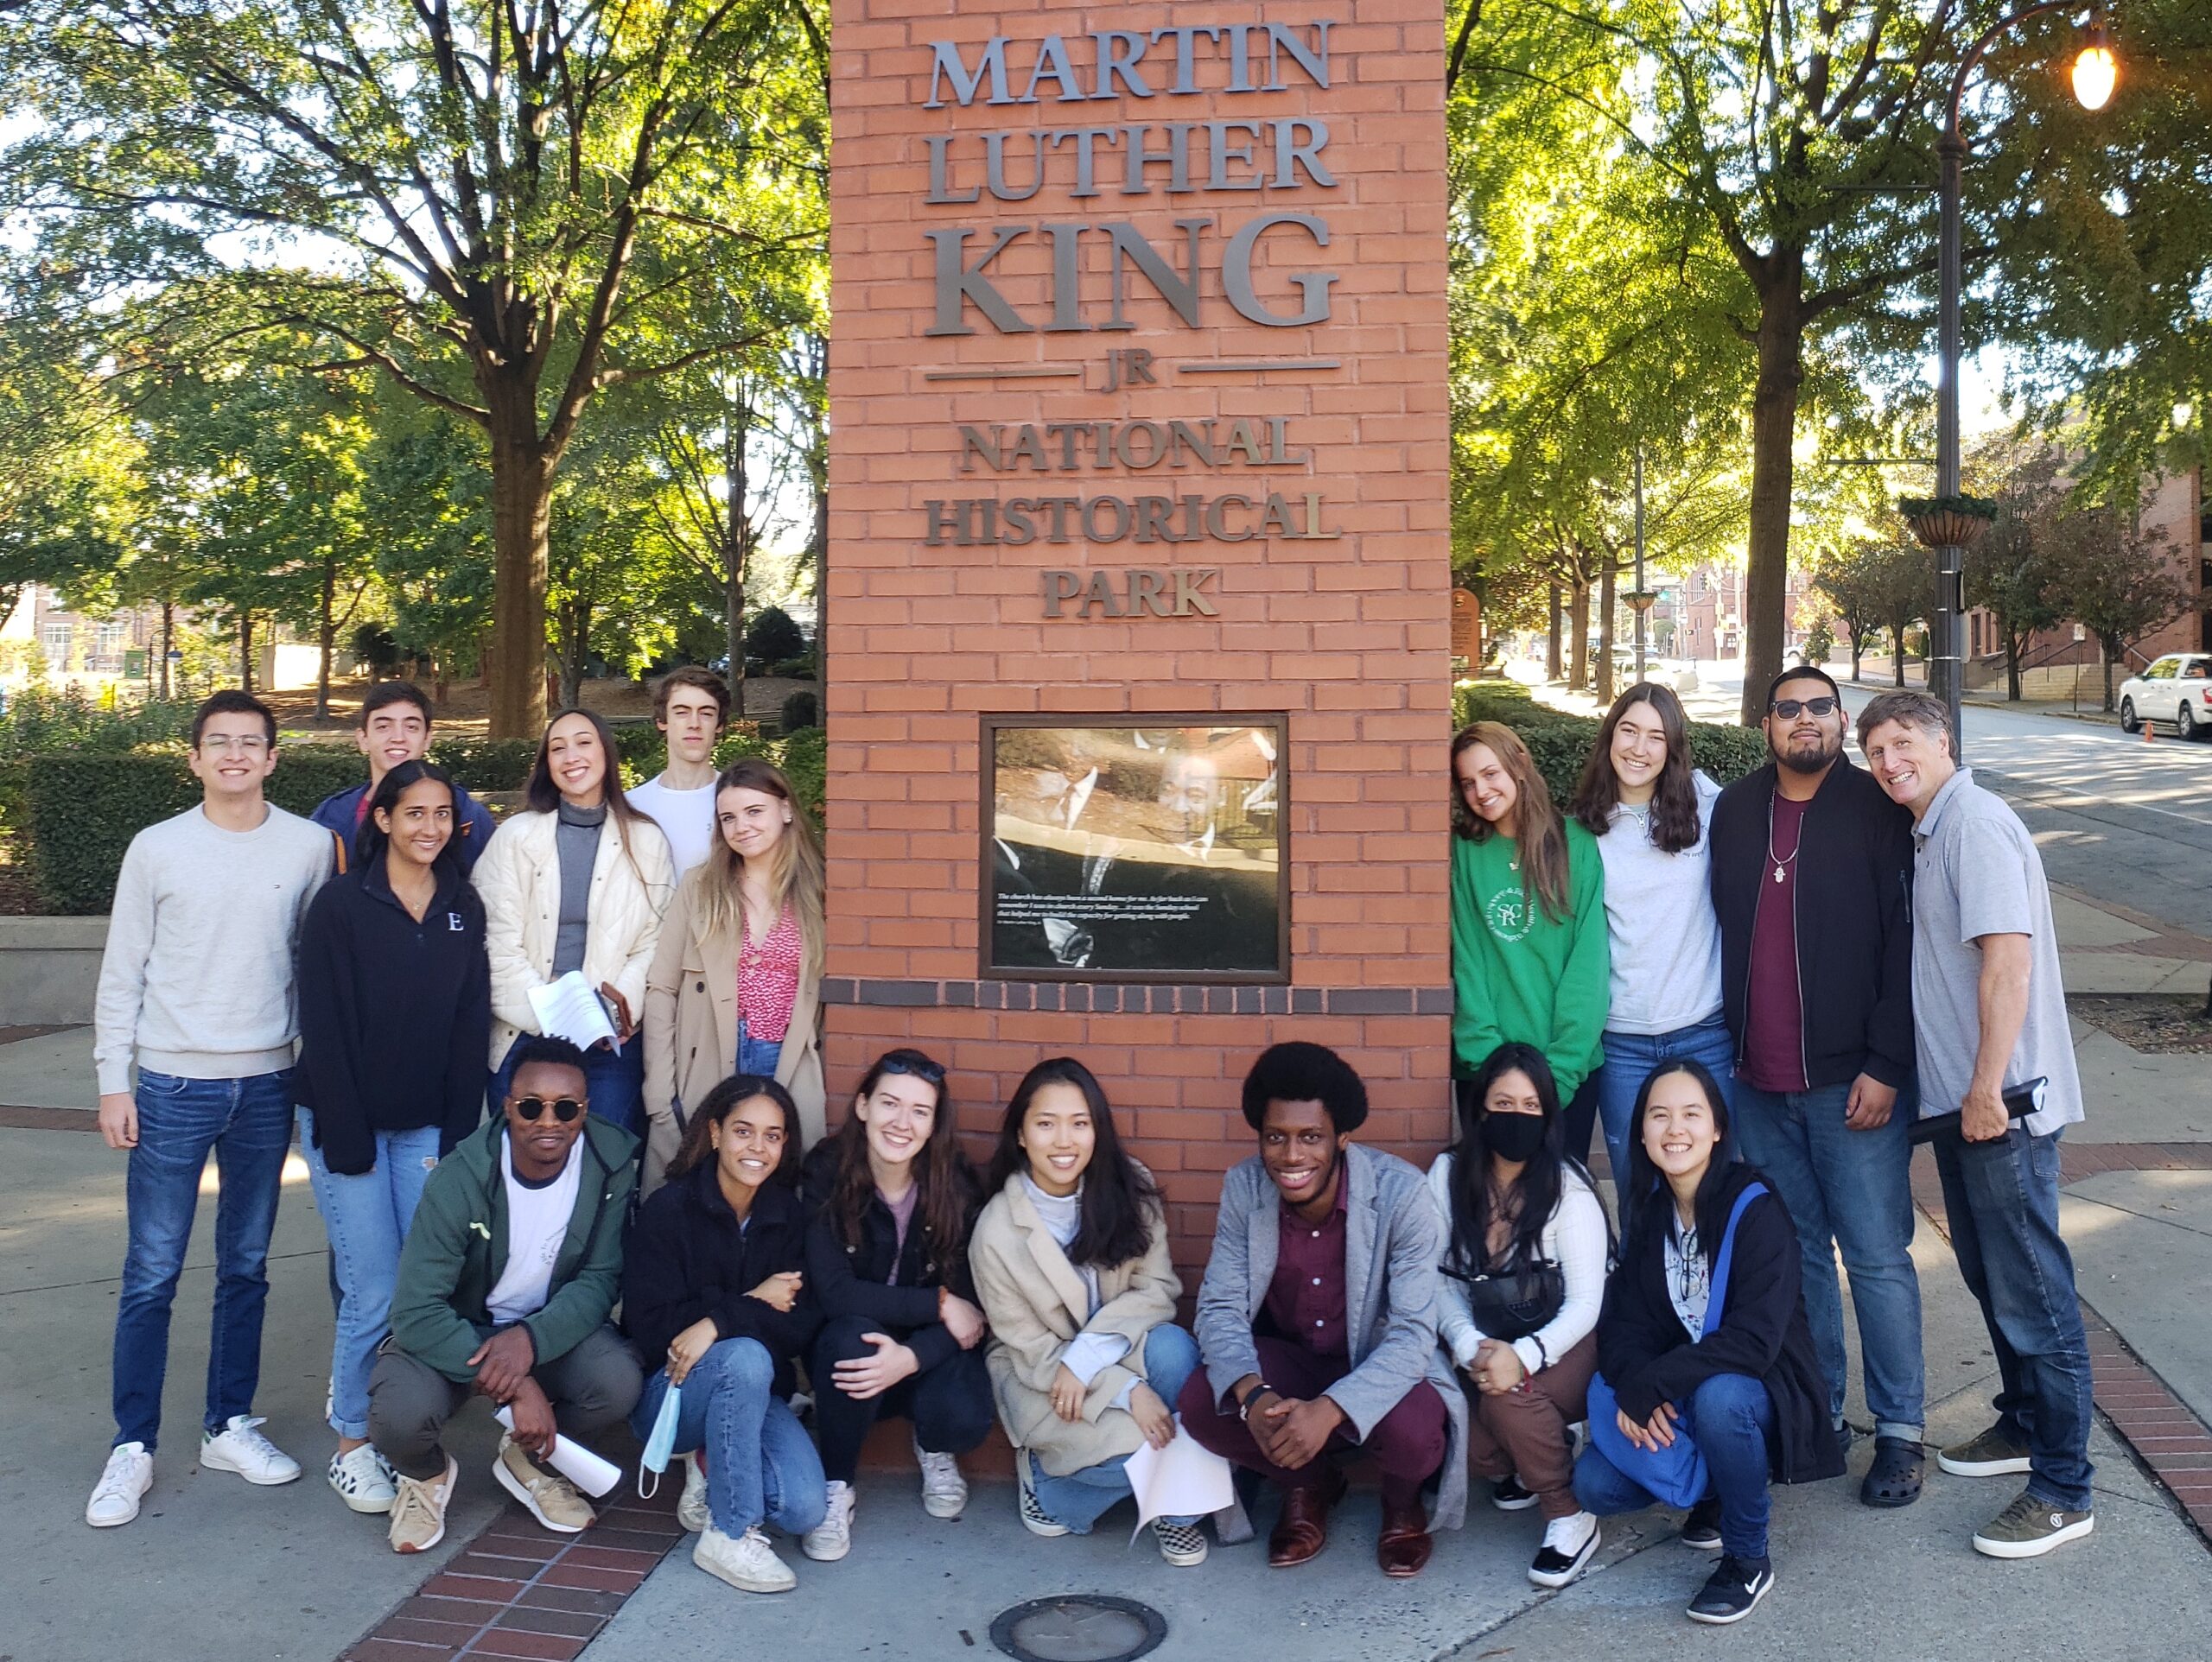 Baker Scholars visit the Martin Luther King, Jr. National Historivcal Park during the 2021 Fall Trip to Atlanta, Georgia.